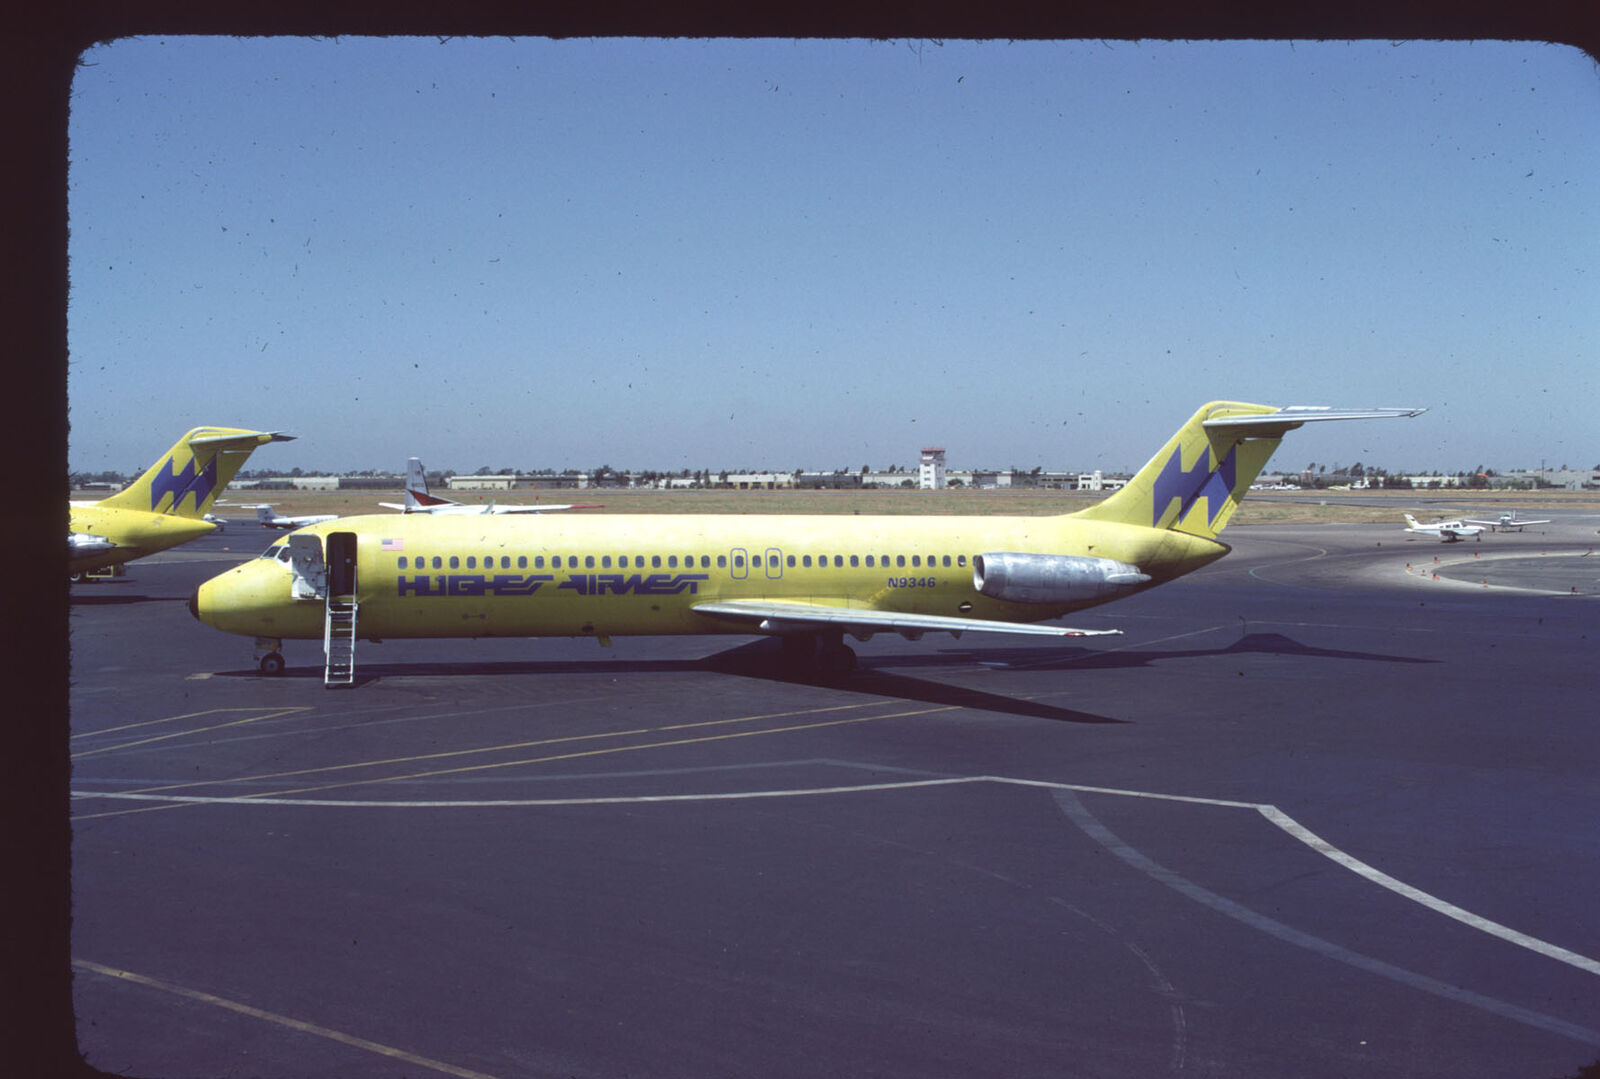 Orig 35mm airline slide Huhges Airwest DC-9-30 N9346